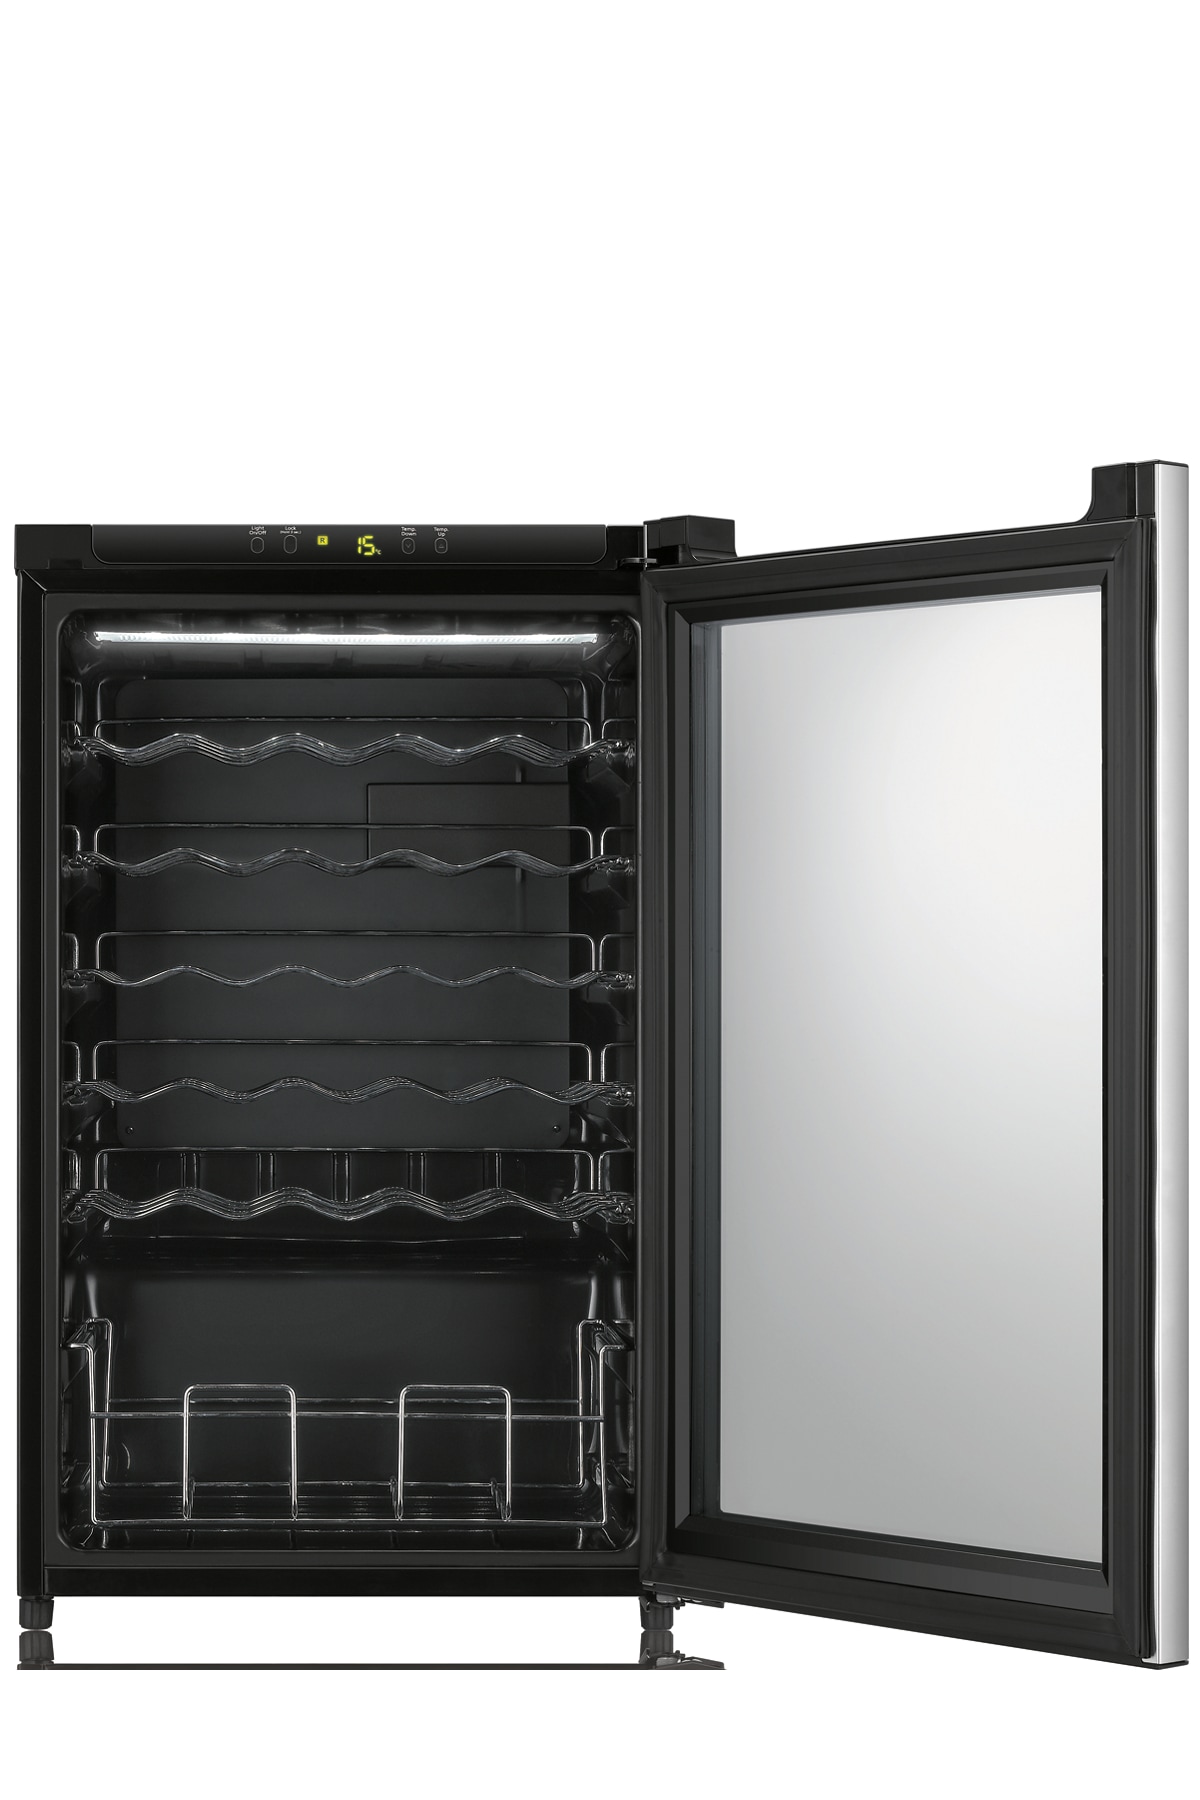 Product data Samsung RW33EBSS wine coolers (RW33EBSS 1)